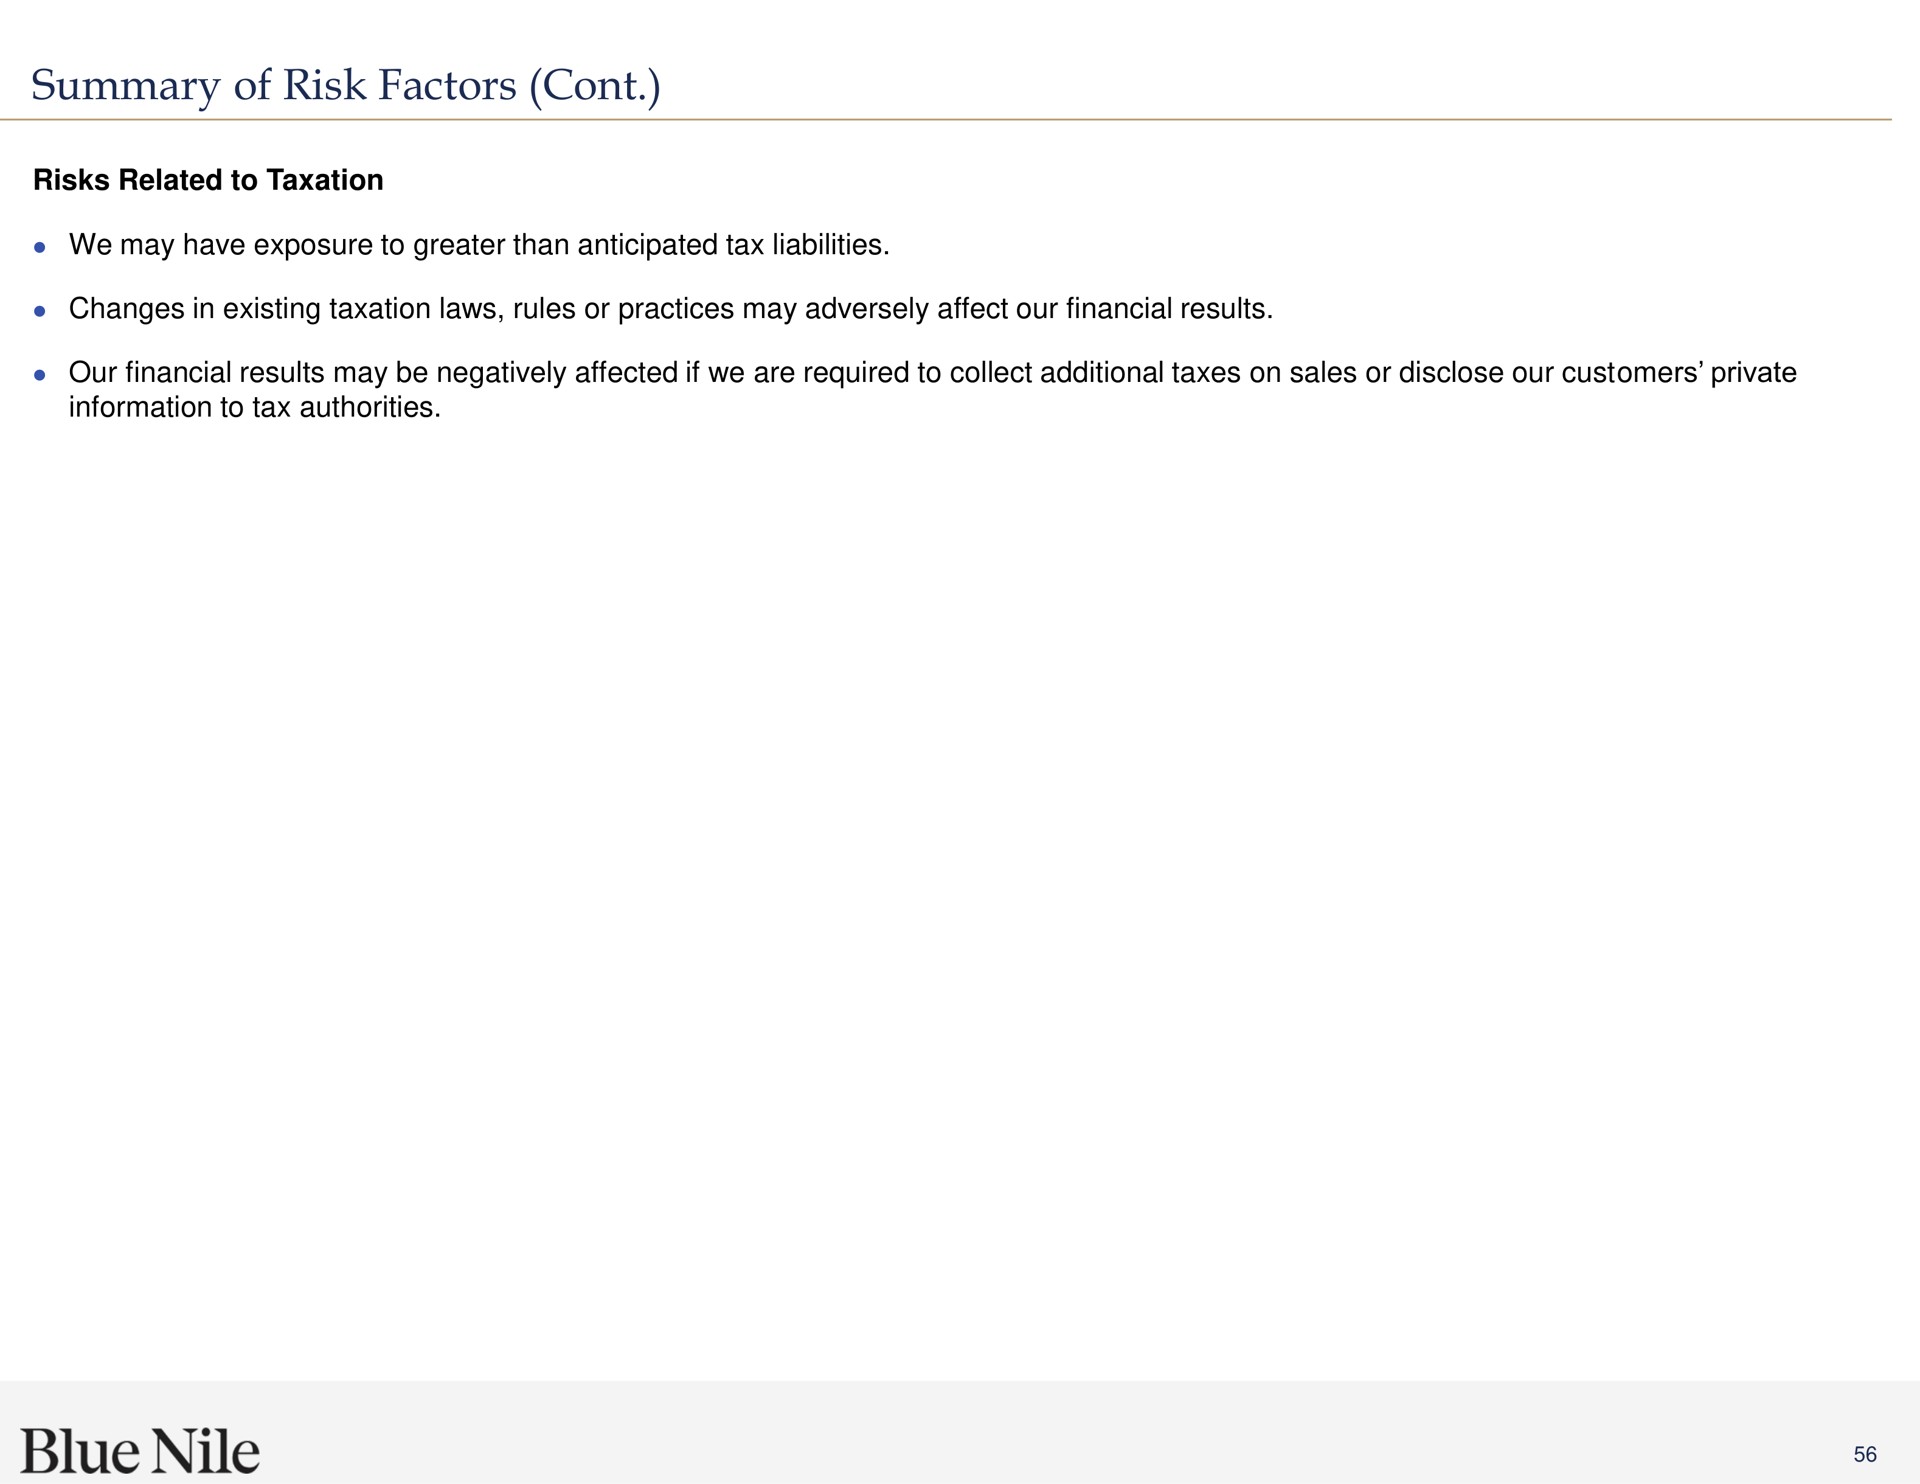 summary of risk factors blue | Blue Nile